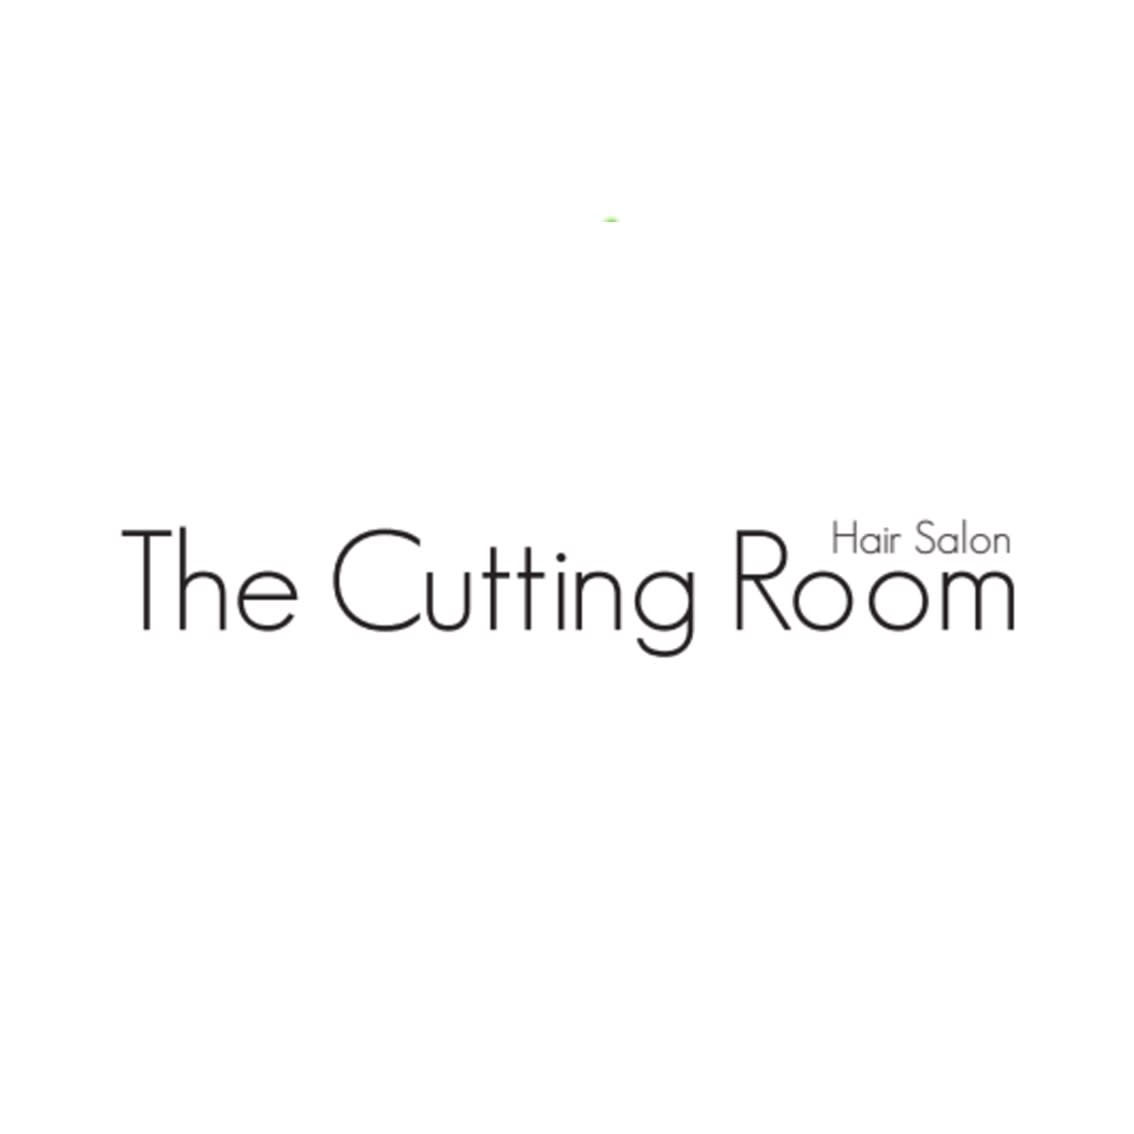 LOGO The Cutting Room Wells 01749 870900